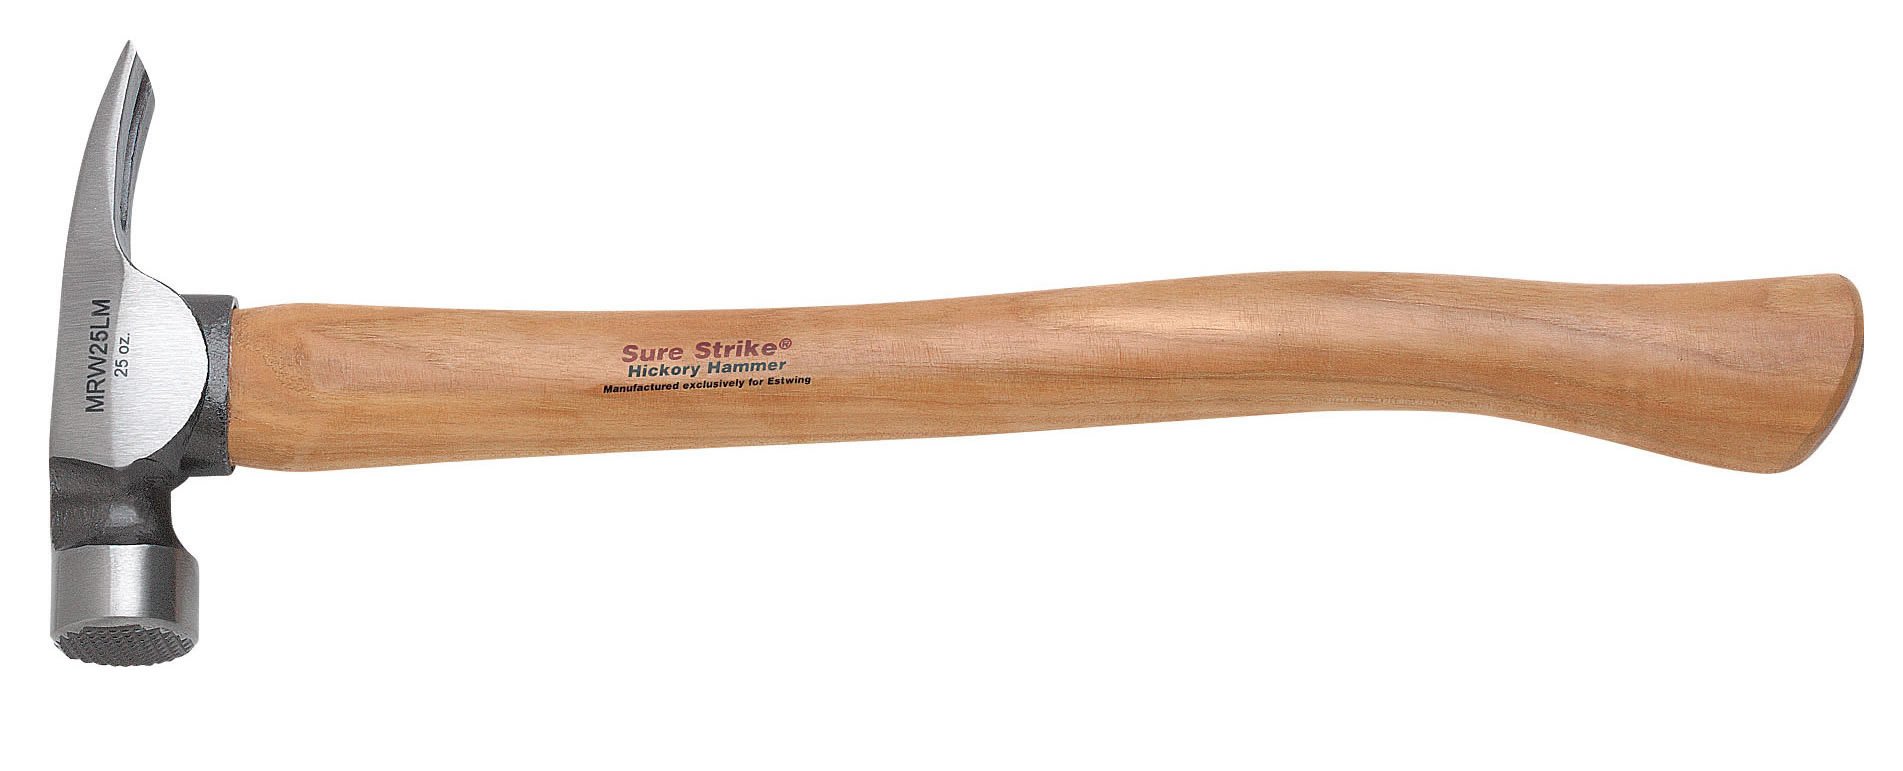 Estwing Sure Strike 25 oz Wood Handle Framing Hammer MRW25LM